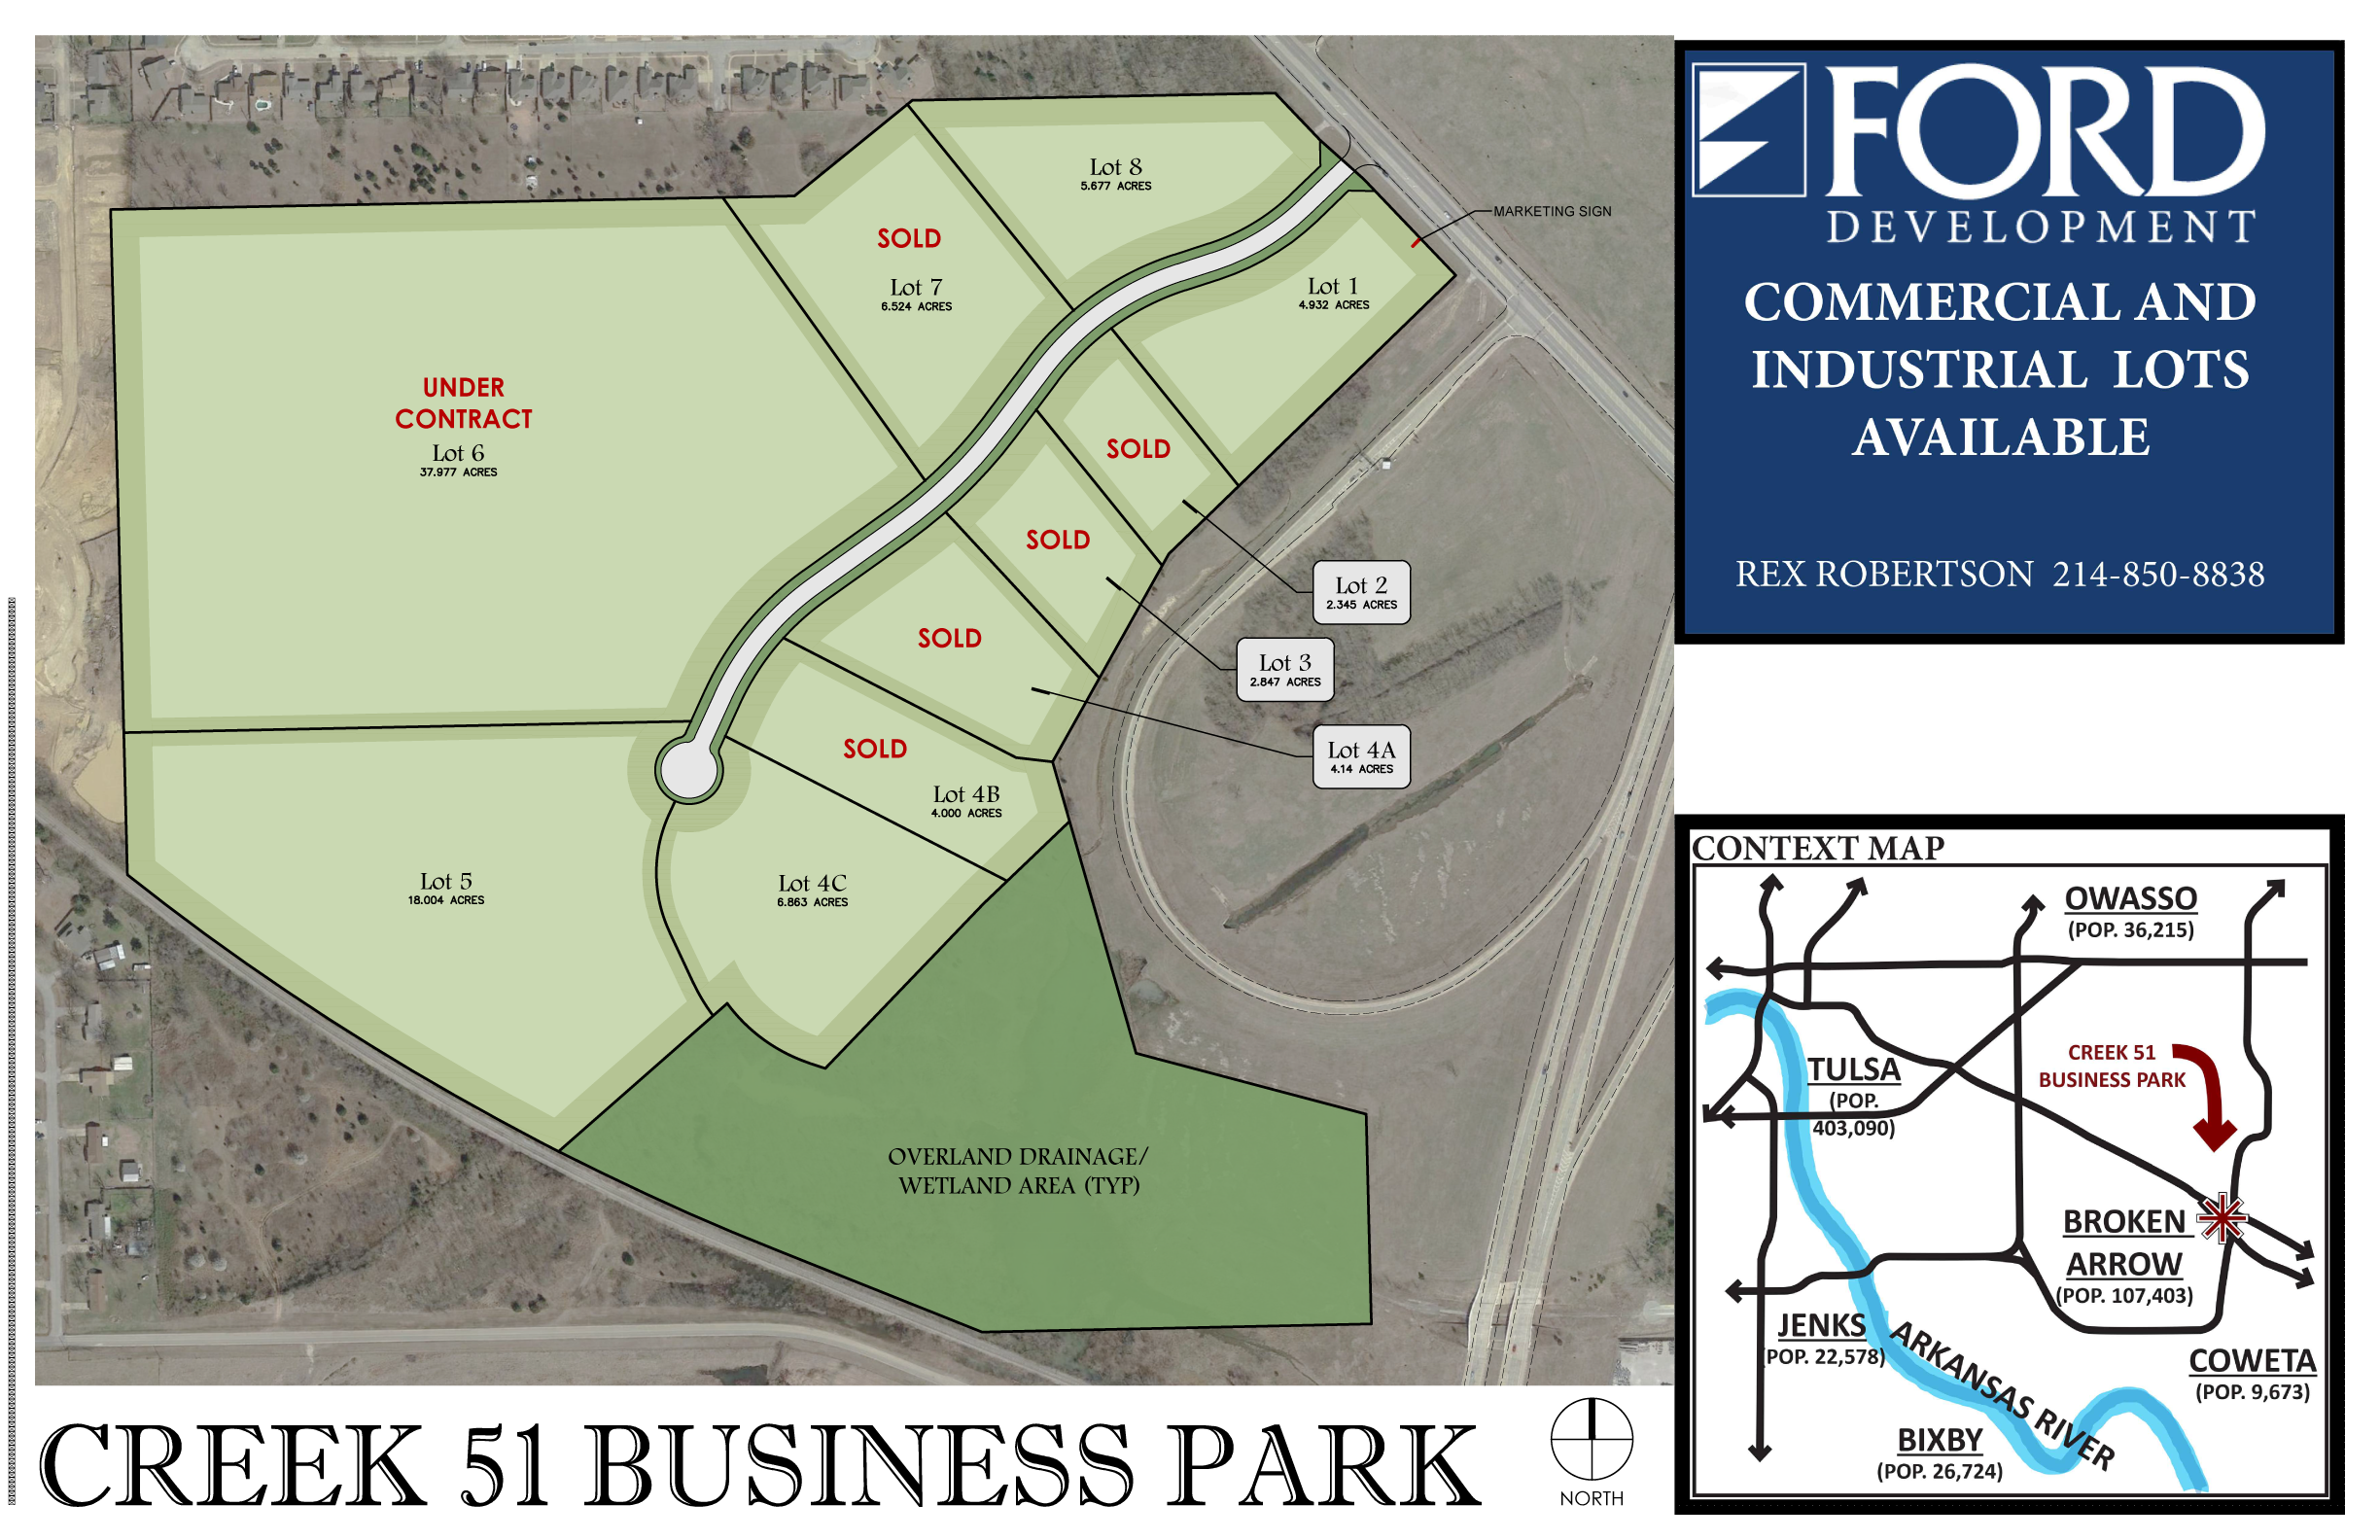 Creek 51 Business Park
          - Master Plan